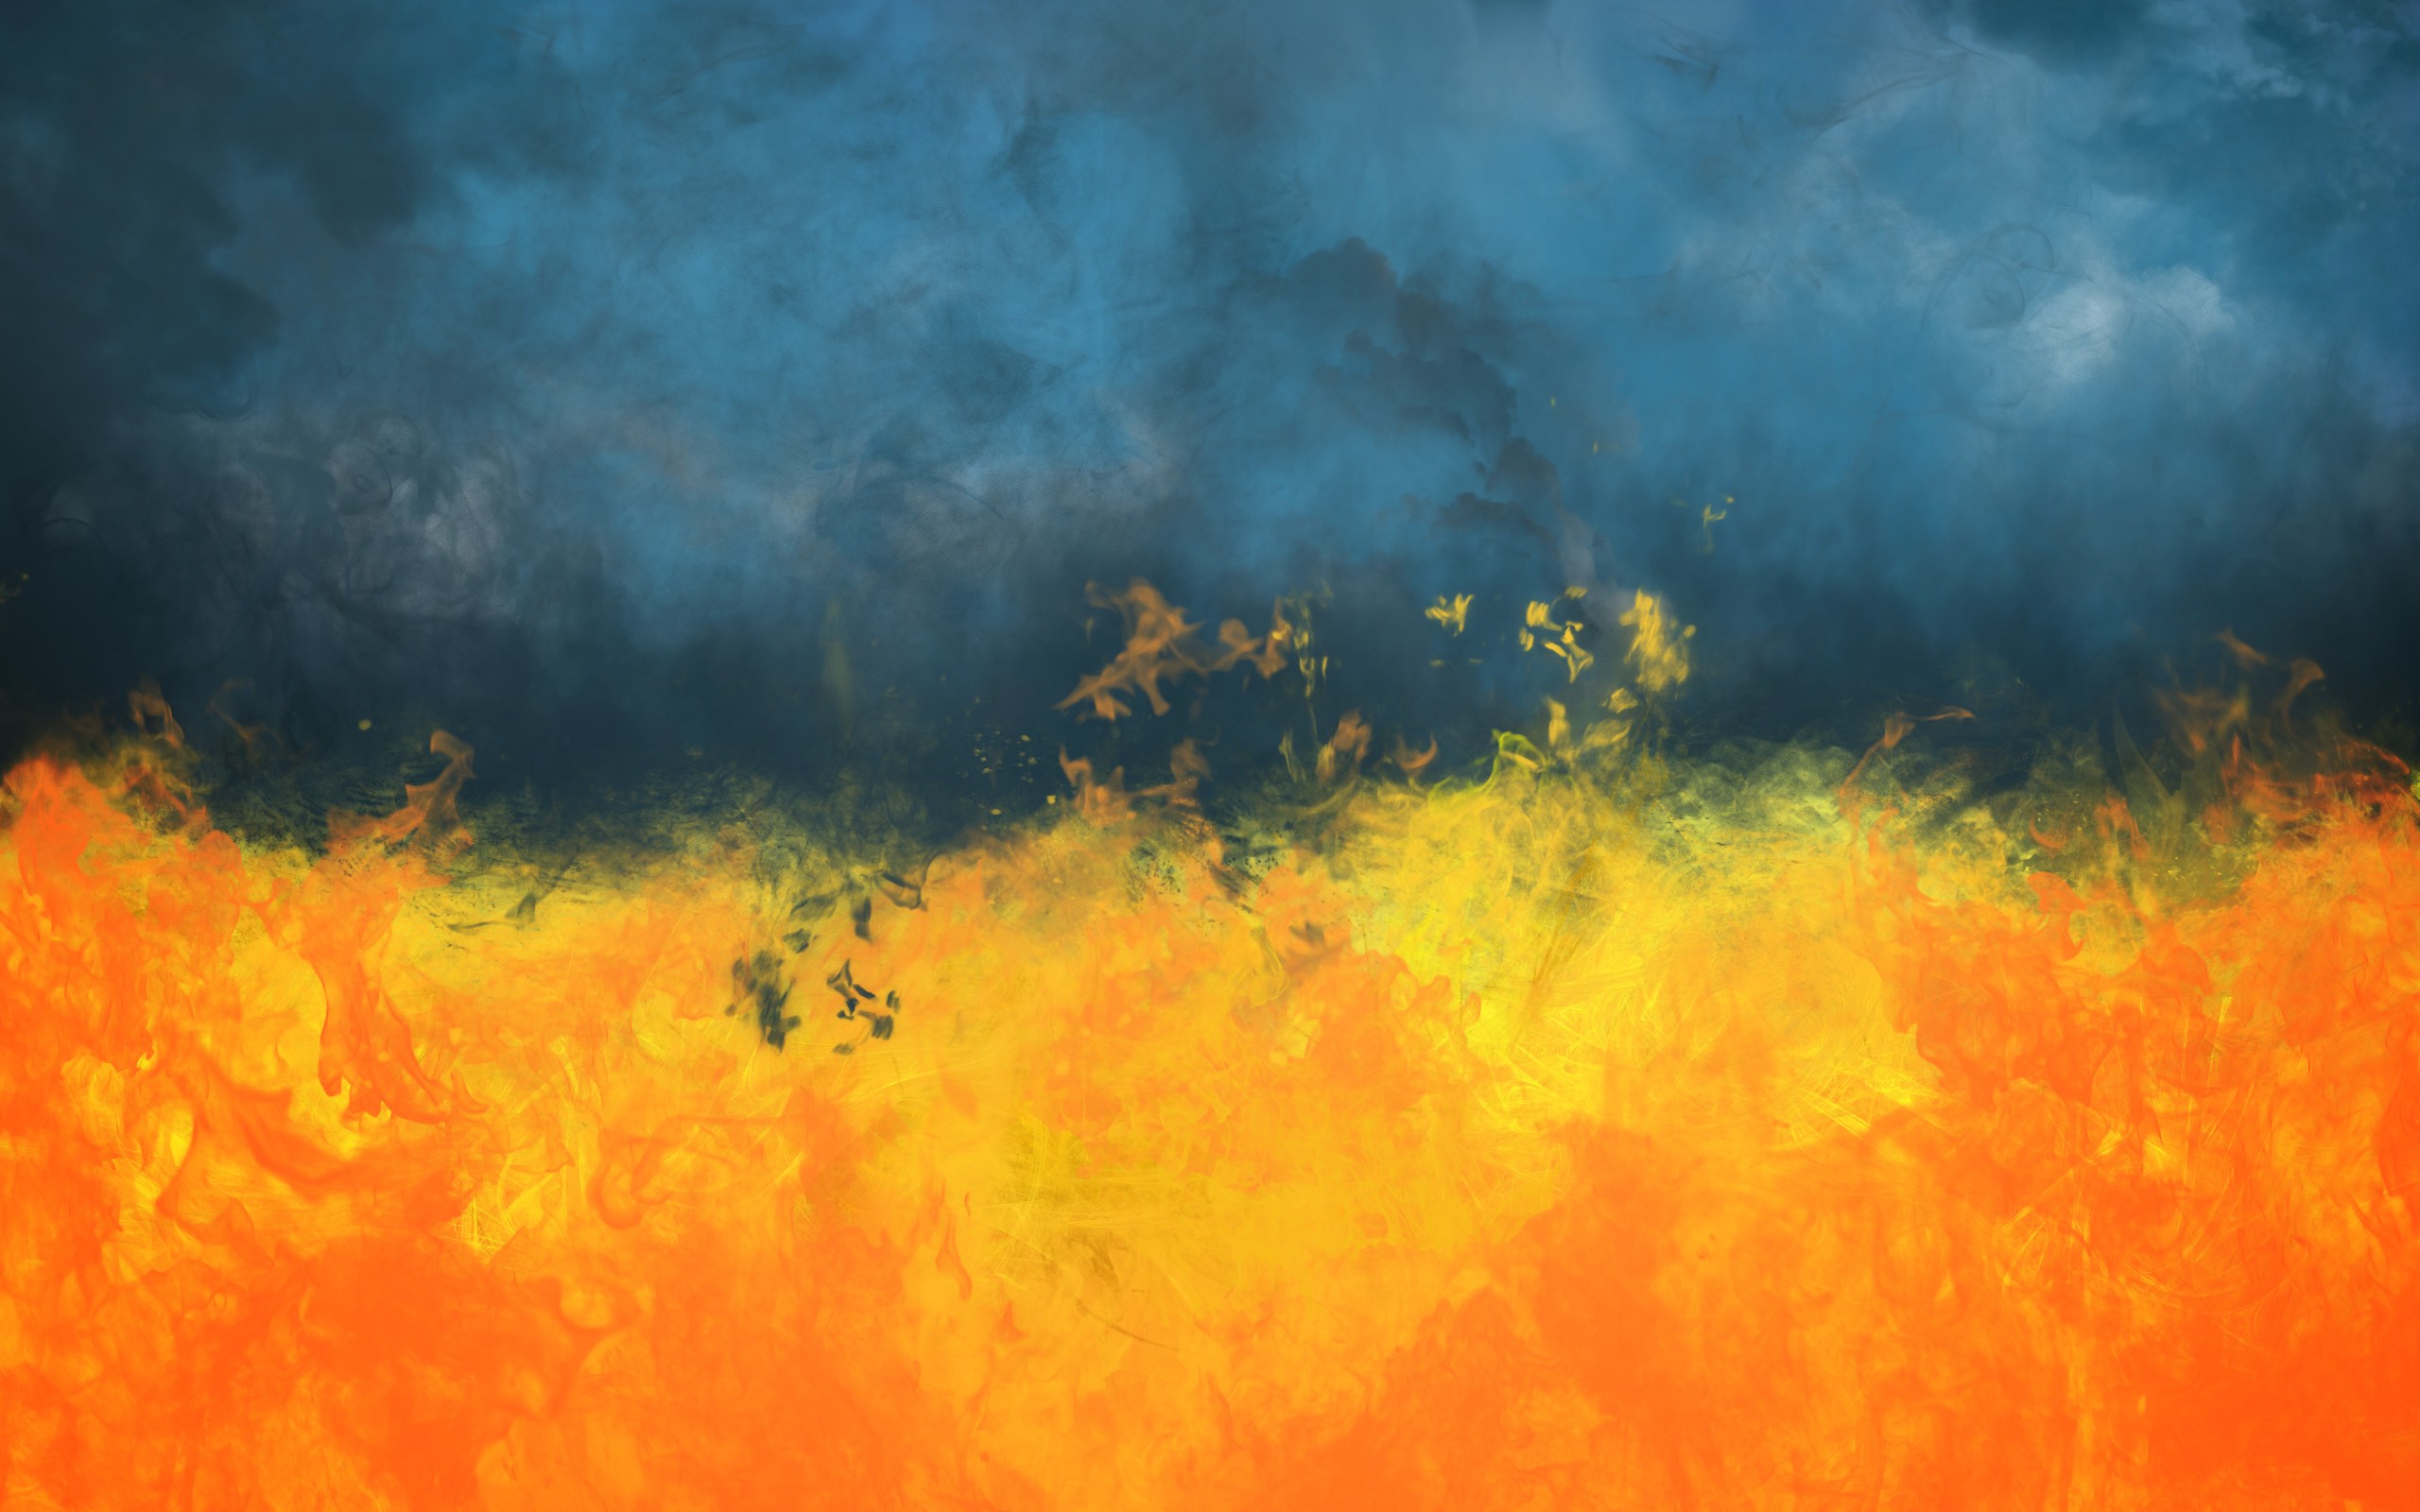 Fondos de pantalla Pintura de incendio abstracto